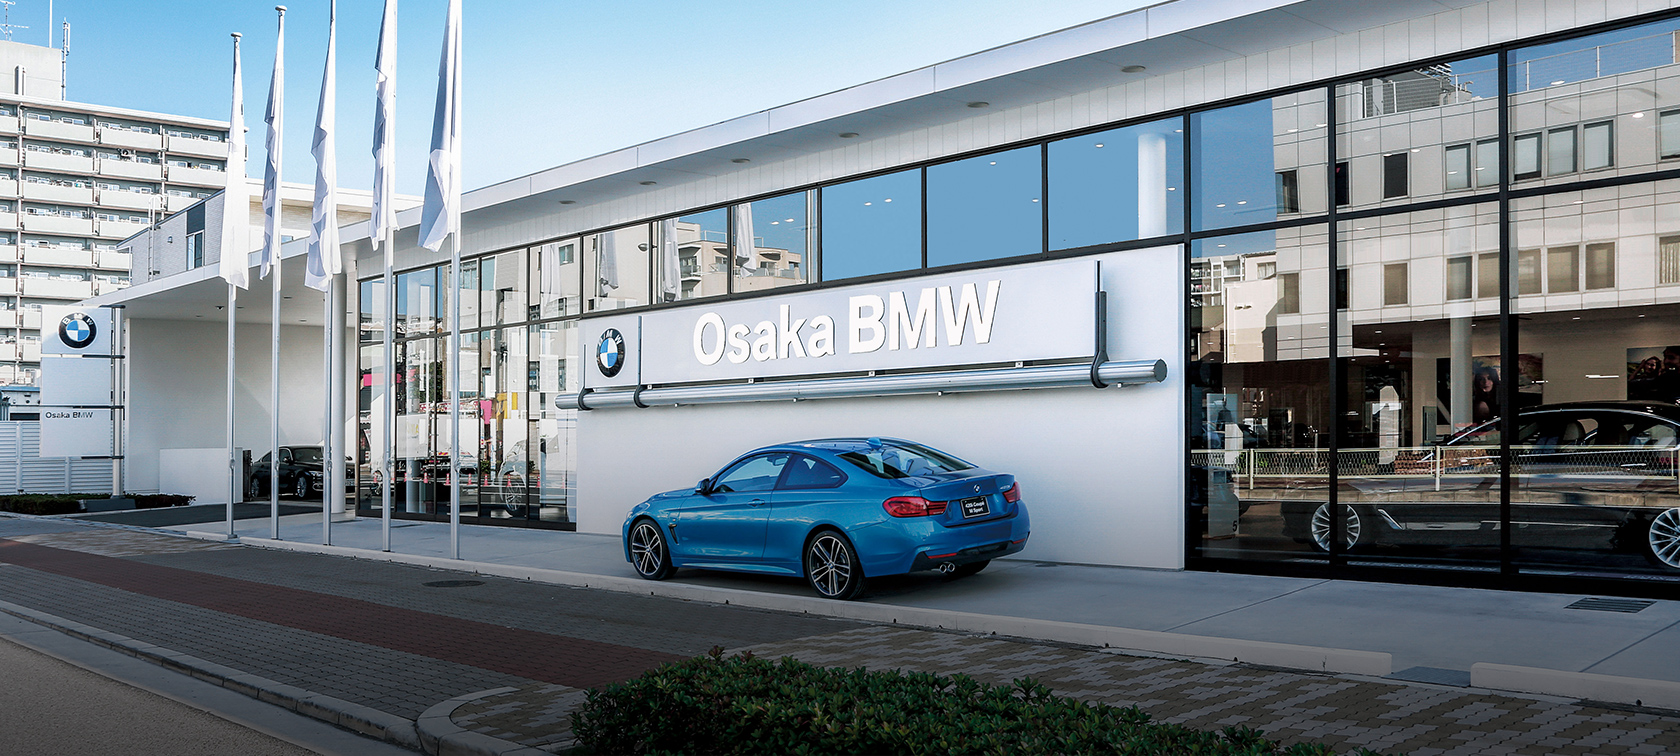 Osaka BMW Premium Selection 城東鶴見